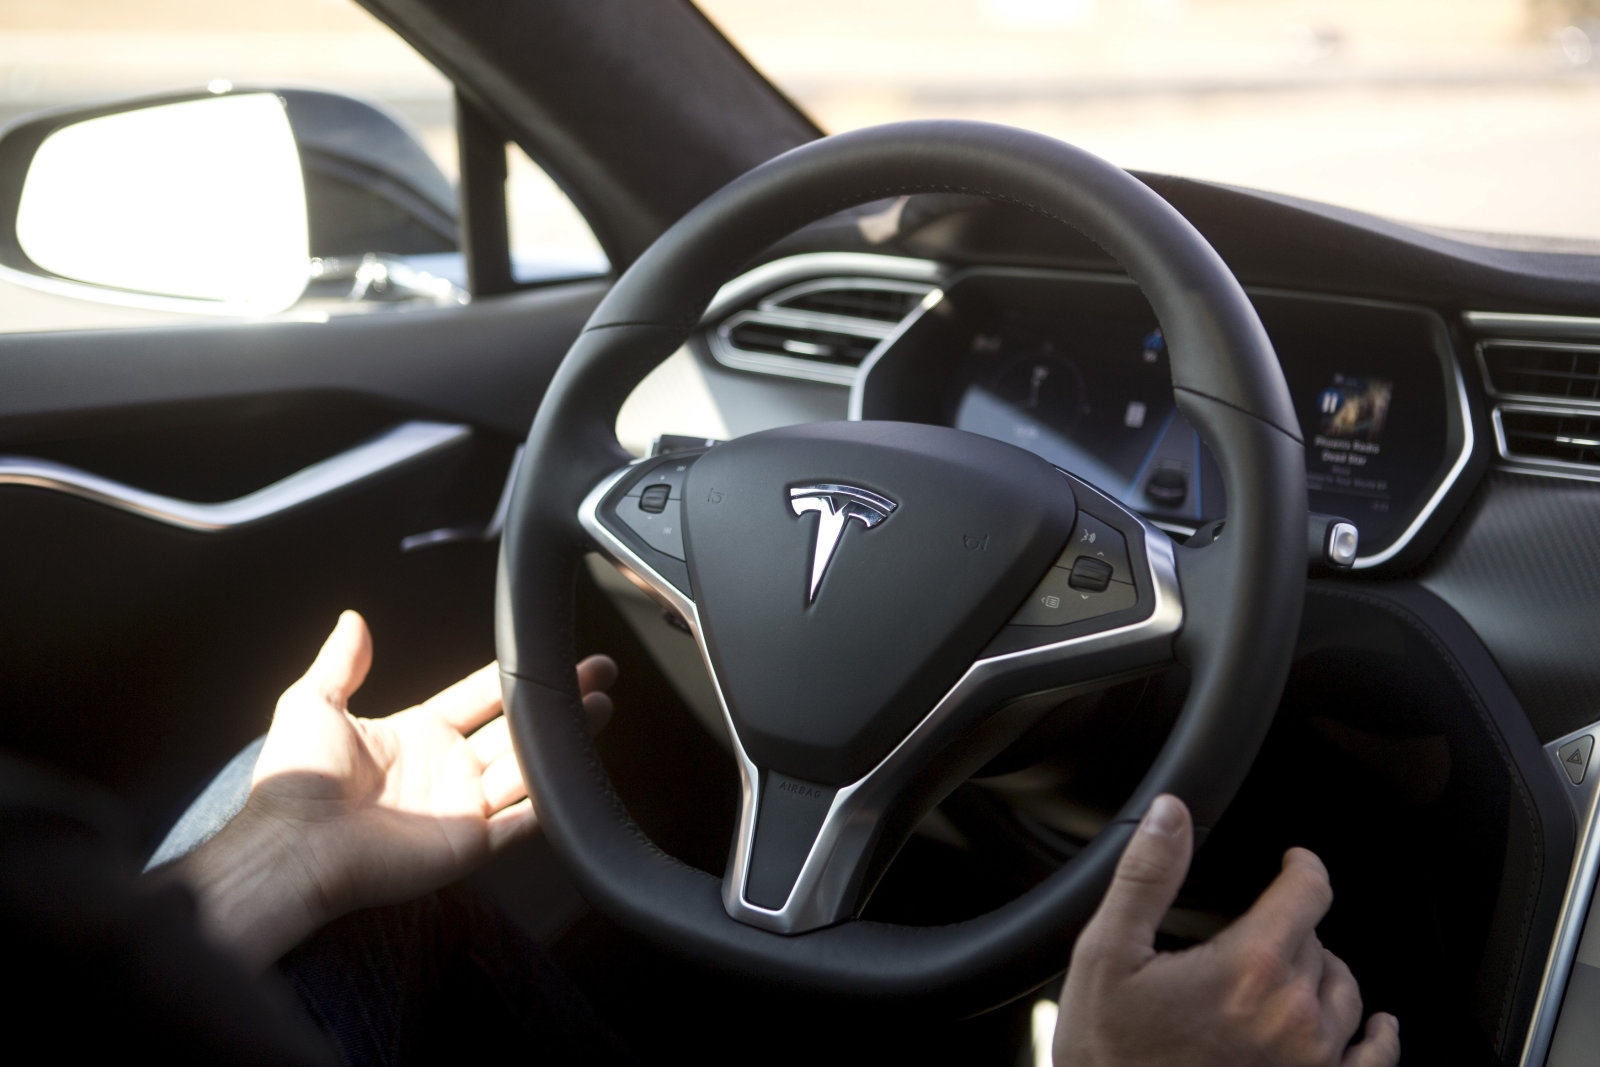 US regulator blocks sales of device that fools Tesla's Autopilot | DeviceDaily.com